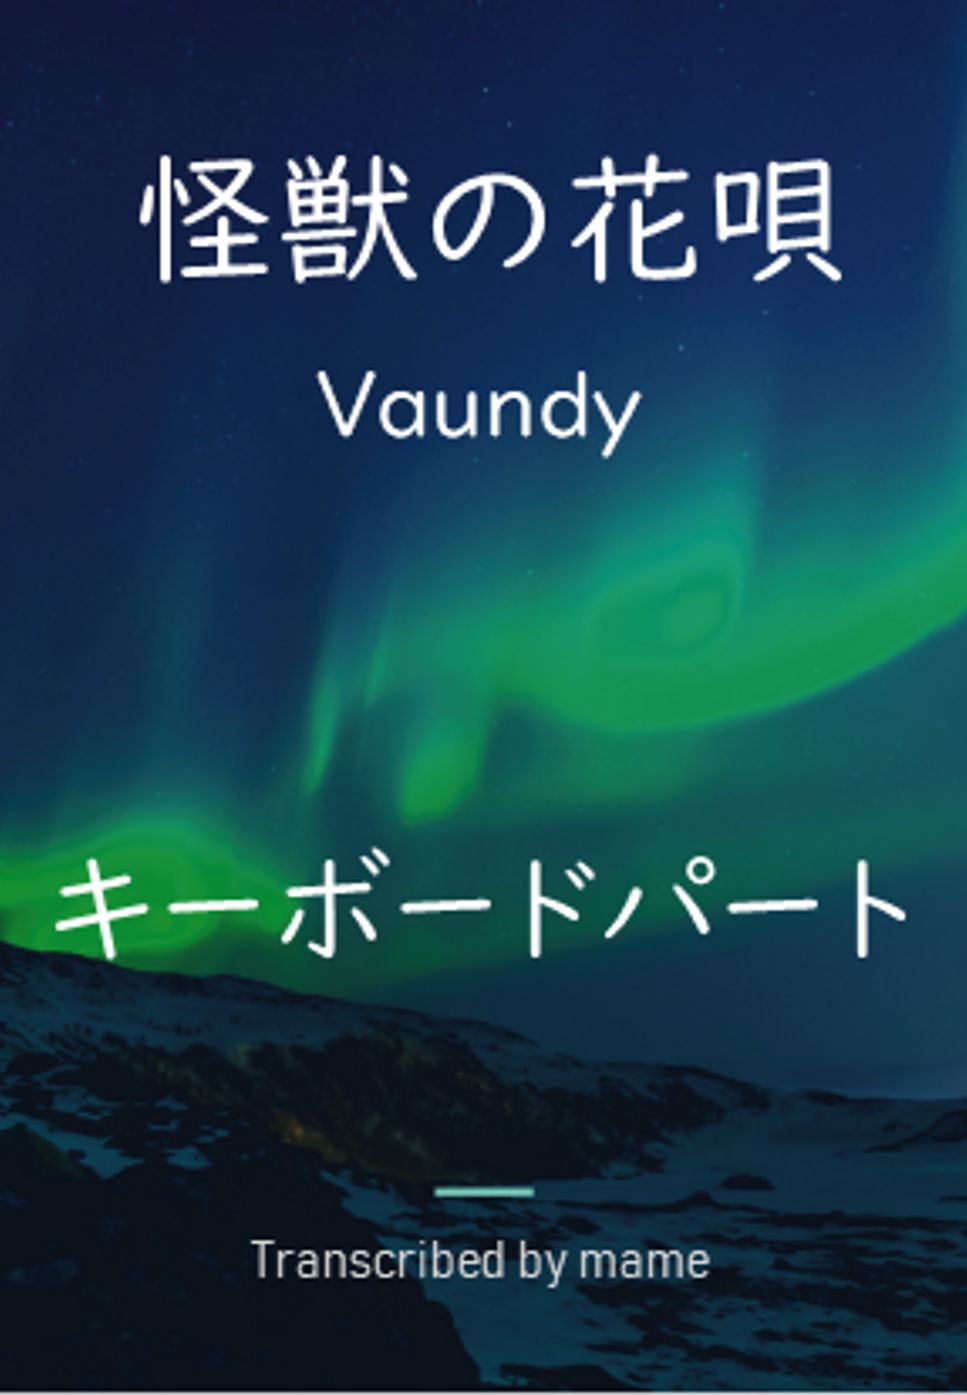 Vaundy - 怪獣の花唄 (keyboard part) by mame